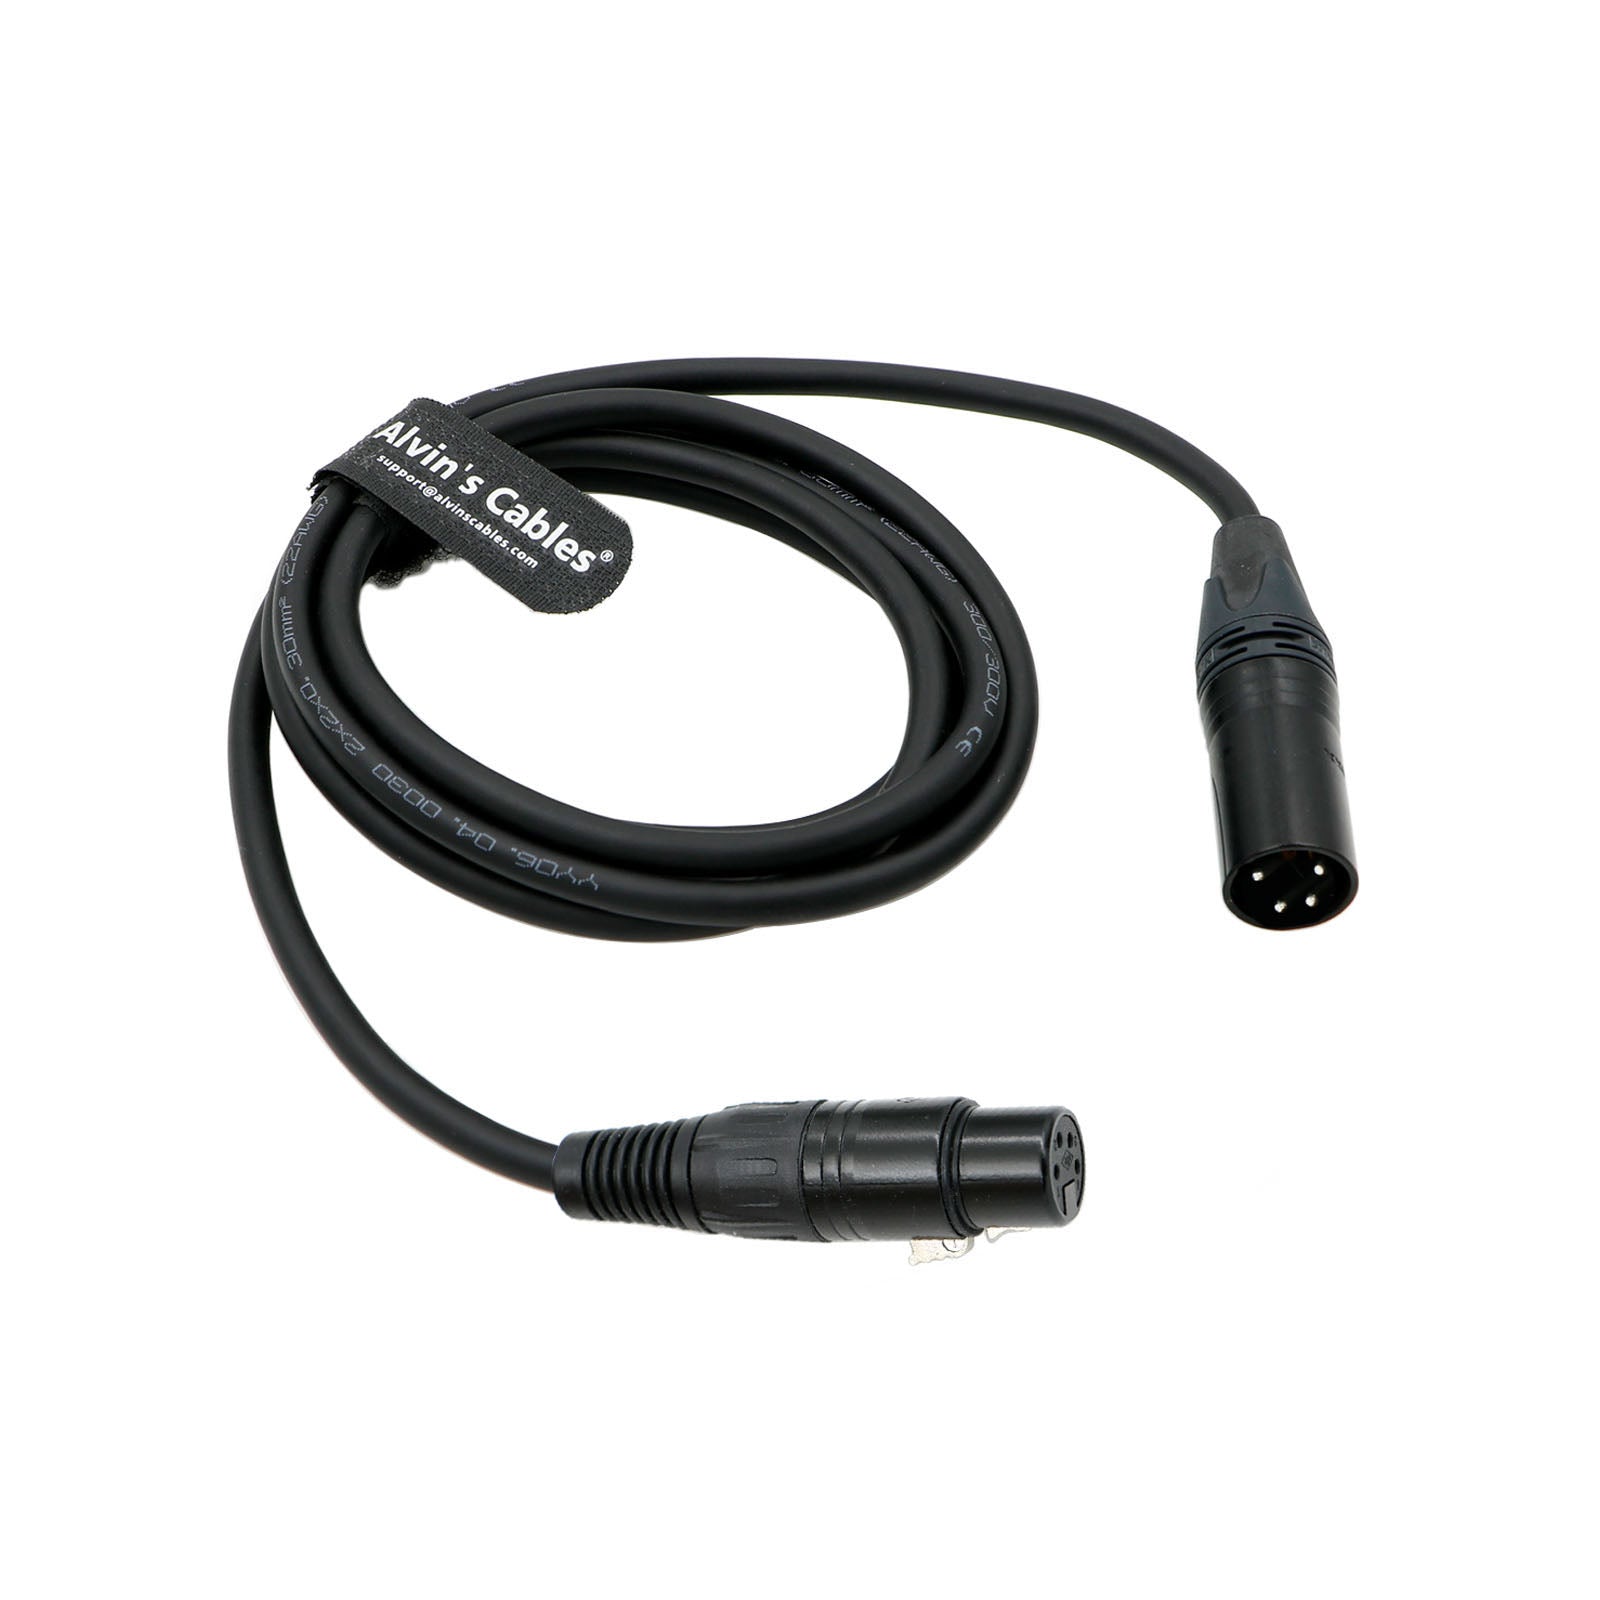 Alvin's Cables XLR 4 Pin Male to XLR 4 Pin Female Power Cable for Sony Venice|F55|SXS Camera, for Canon C300 Mkiii|C500 Mkii, Blackmagic Ursa Mini Pro 2M/6.56ft